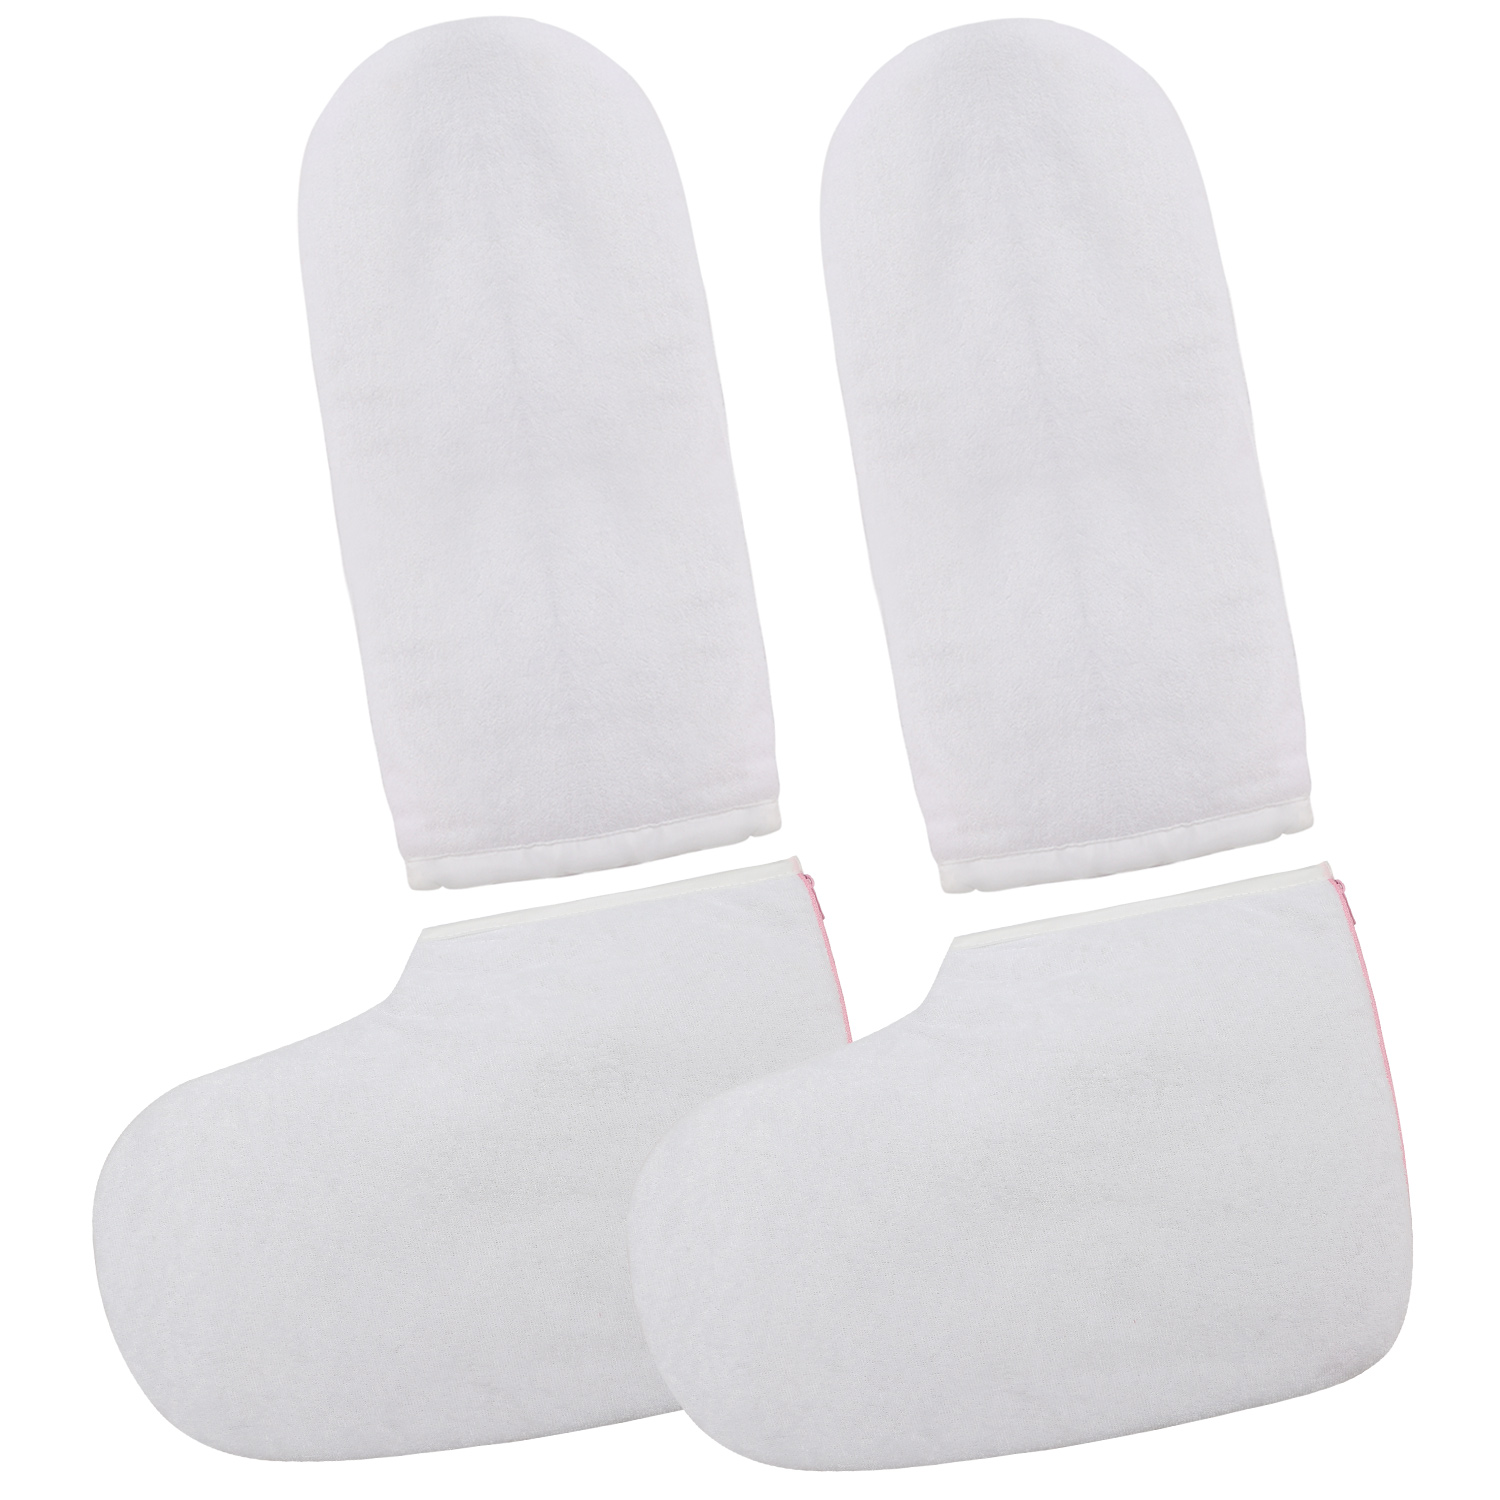 Khall Treatment Mitten Paraffin Wax Bath Foot Gloves For Parafin Wax 